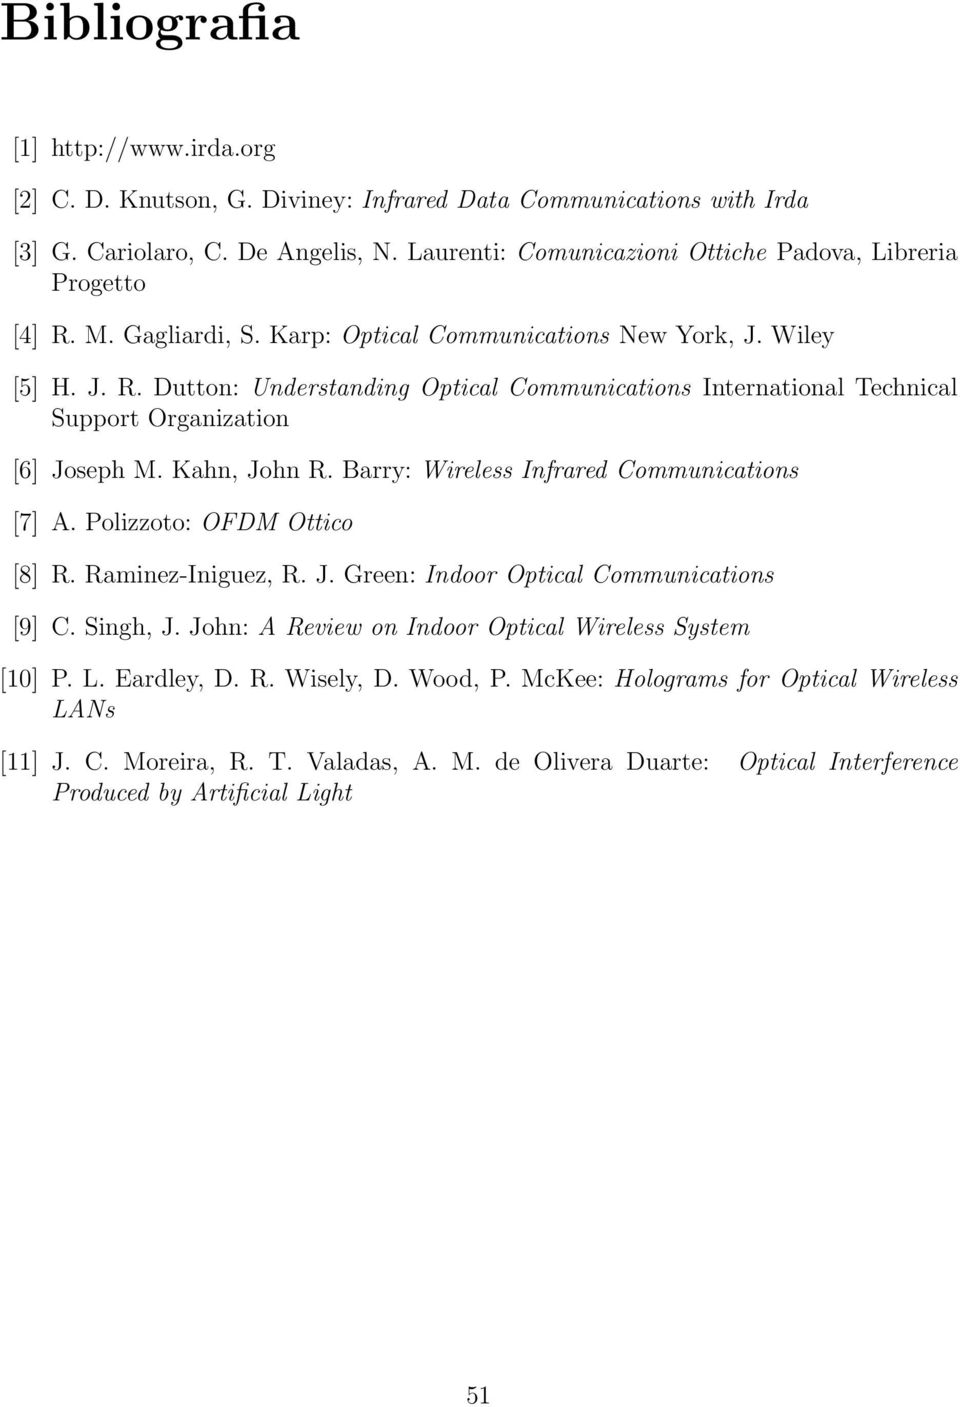 Kahn, John R. Barry: Wireless Infrared Communications [7] A. Polizzoto: OFDM Ottico [8] R. Raminez-Iniguez, R. J. Green: Indoor Optical Communications [9] C. Singh, J.